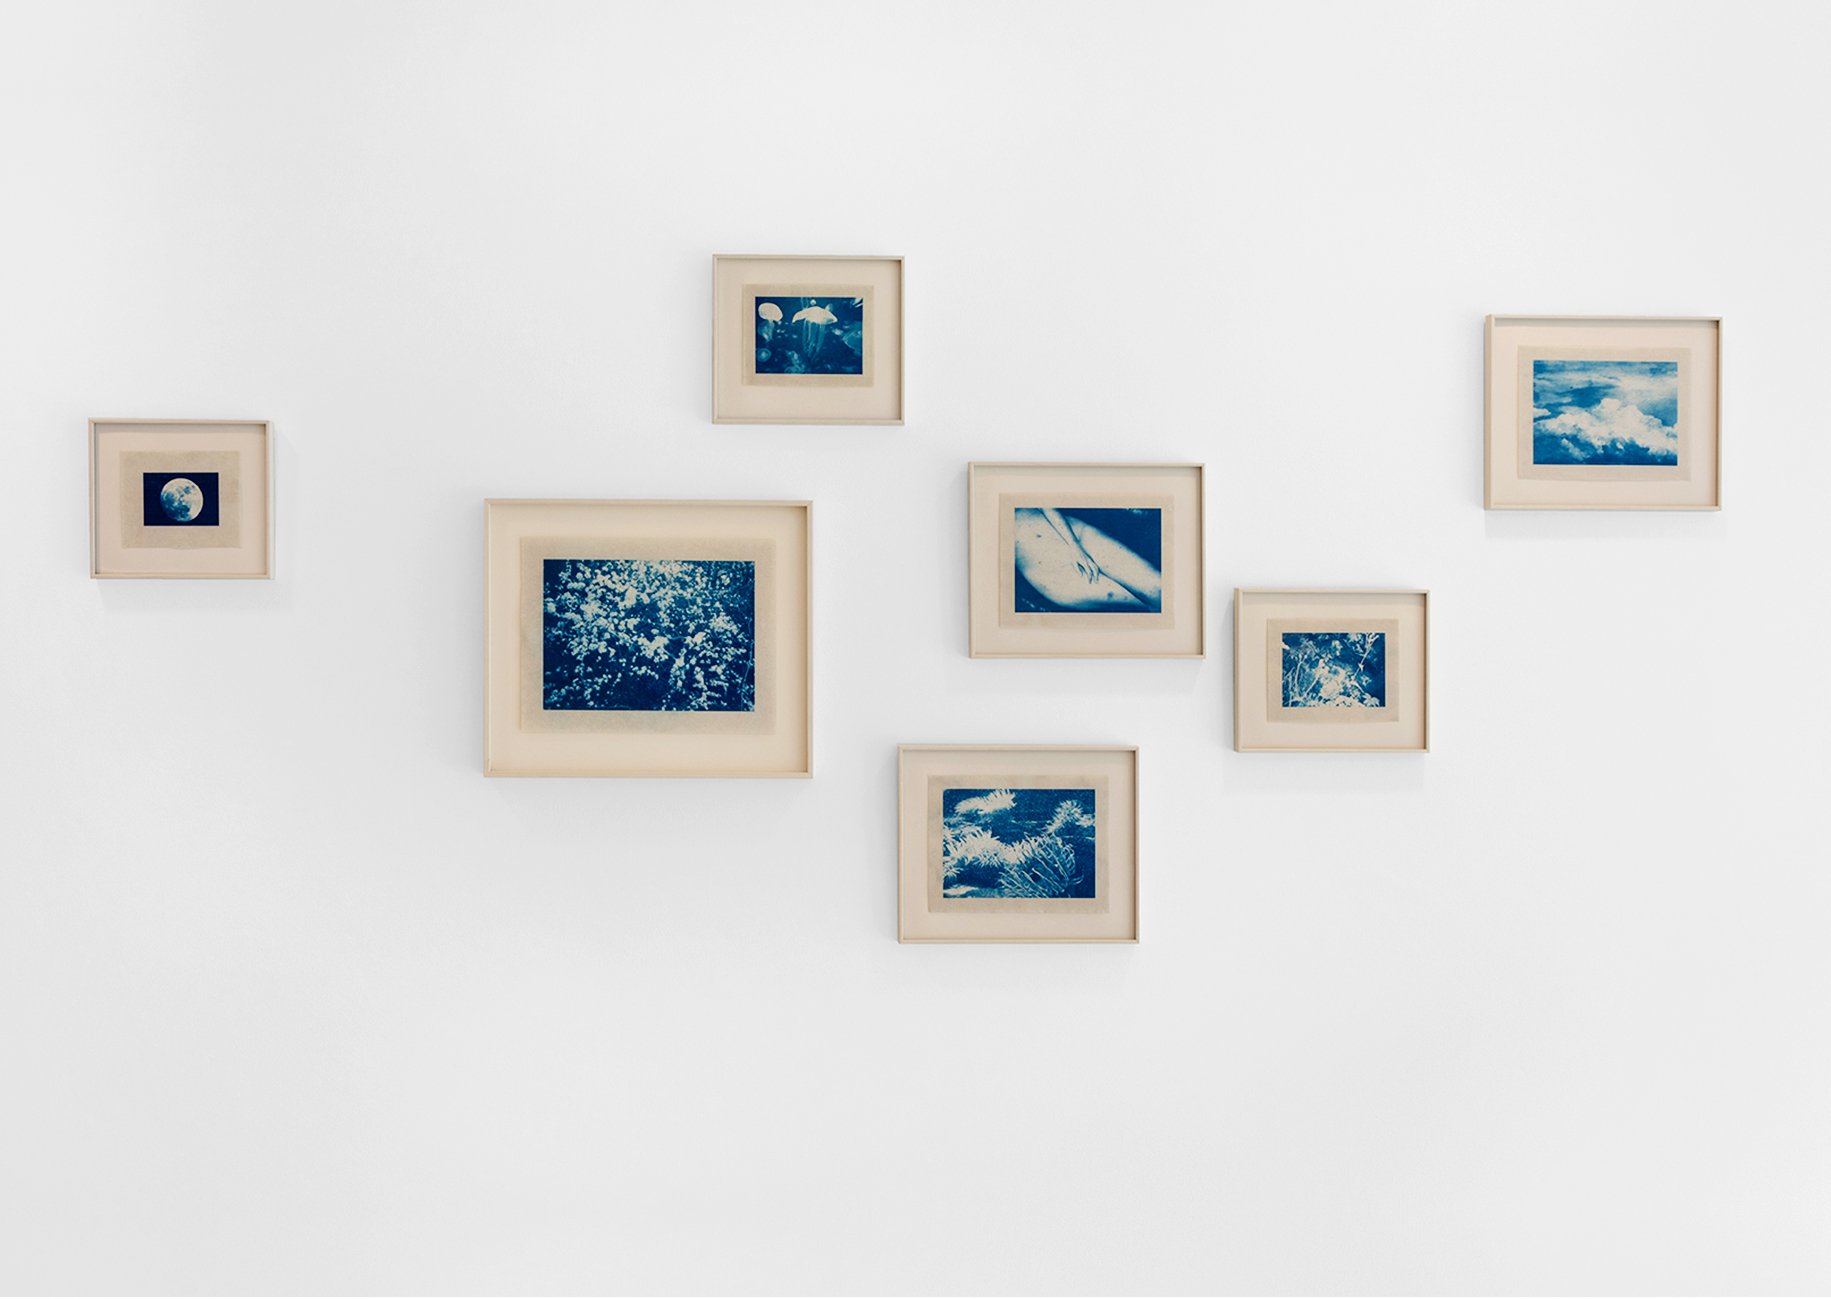  Cyanotypes on Kozo Paper Galerie Wilms 2021 